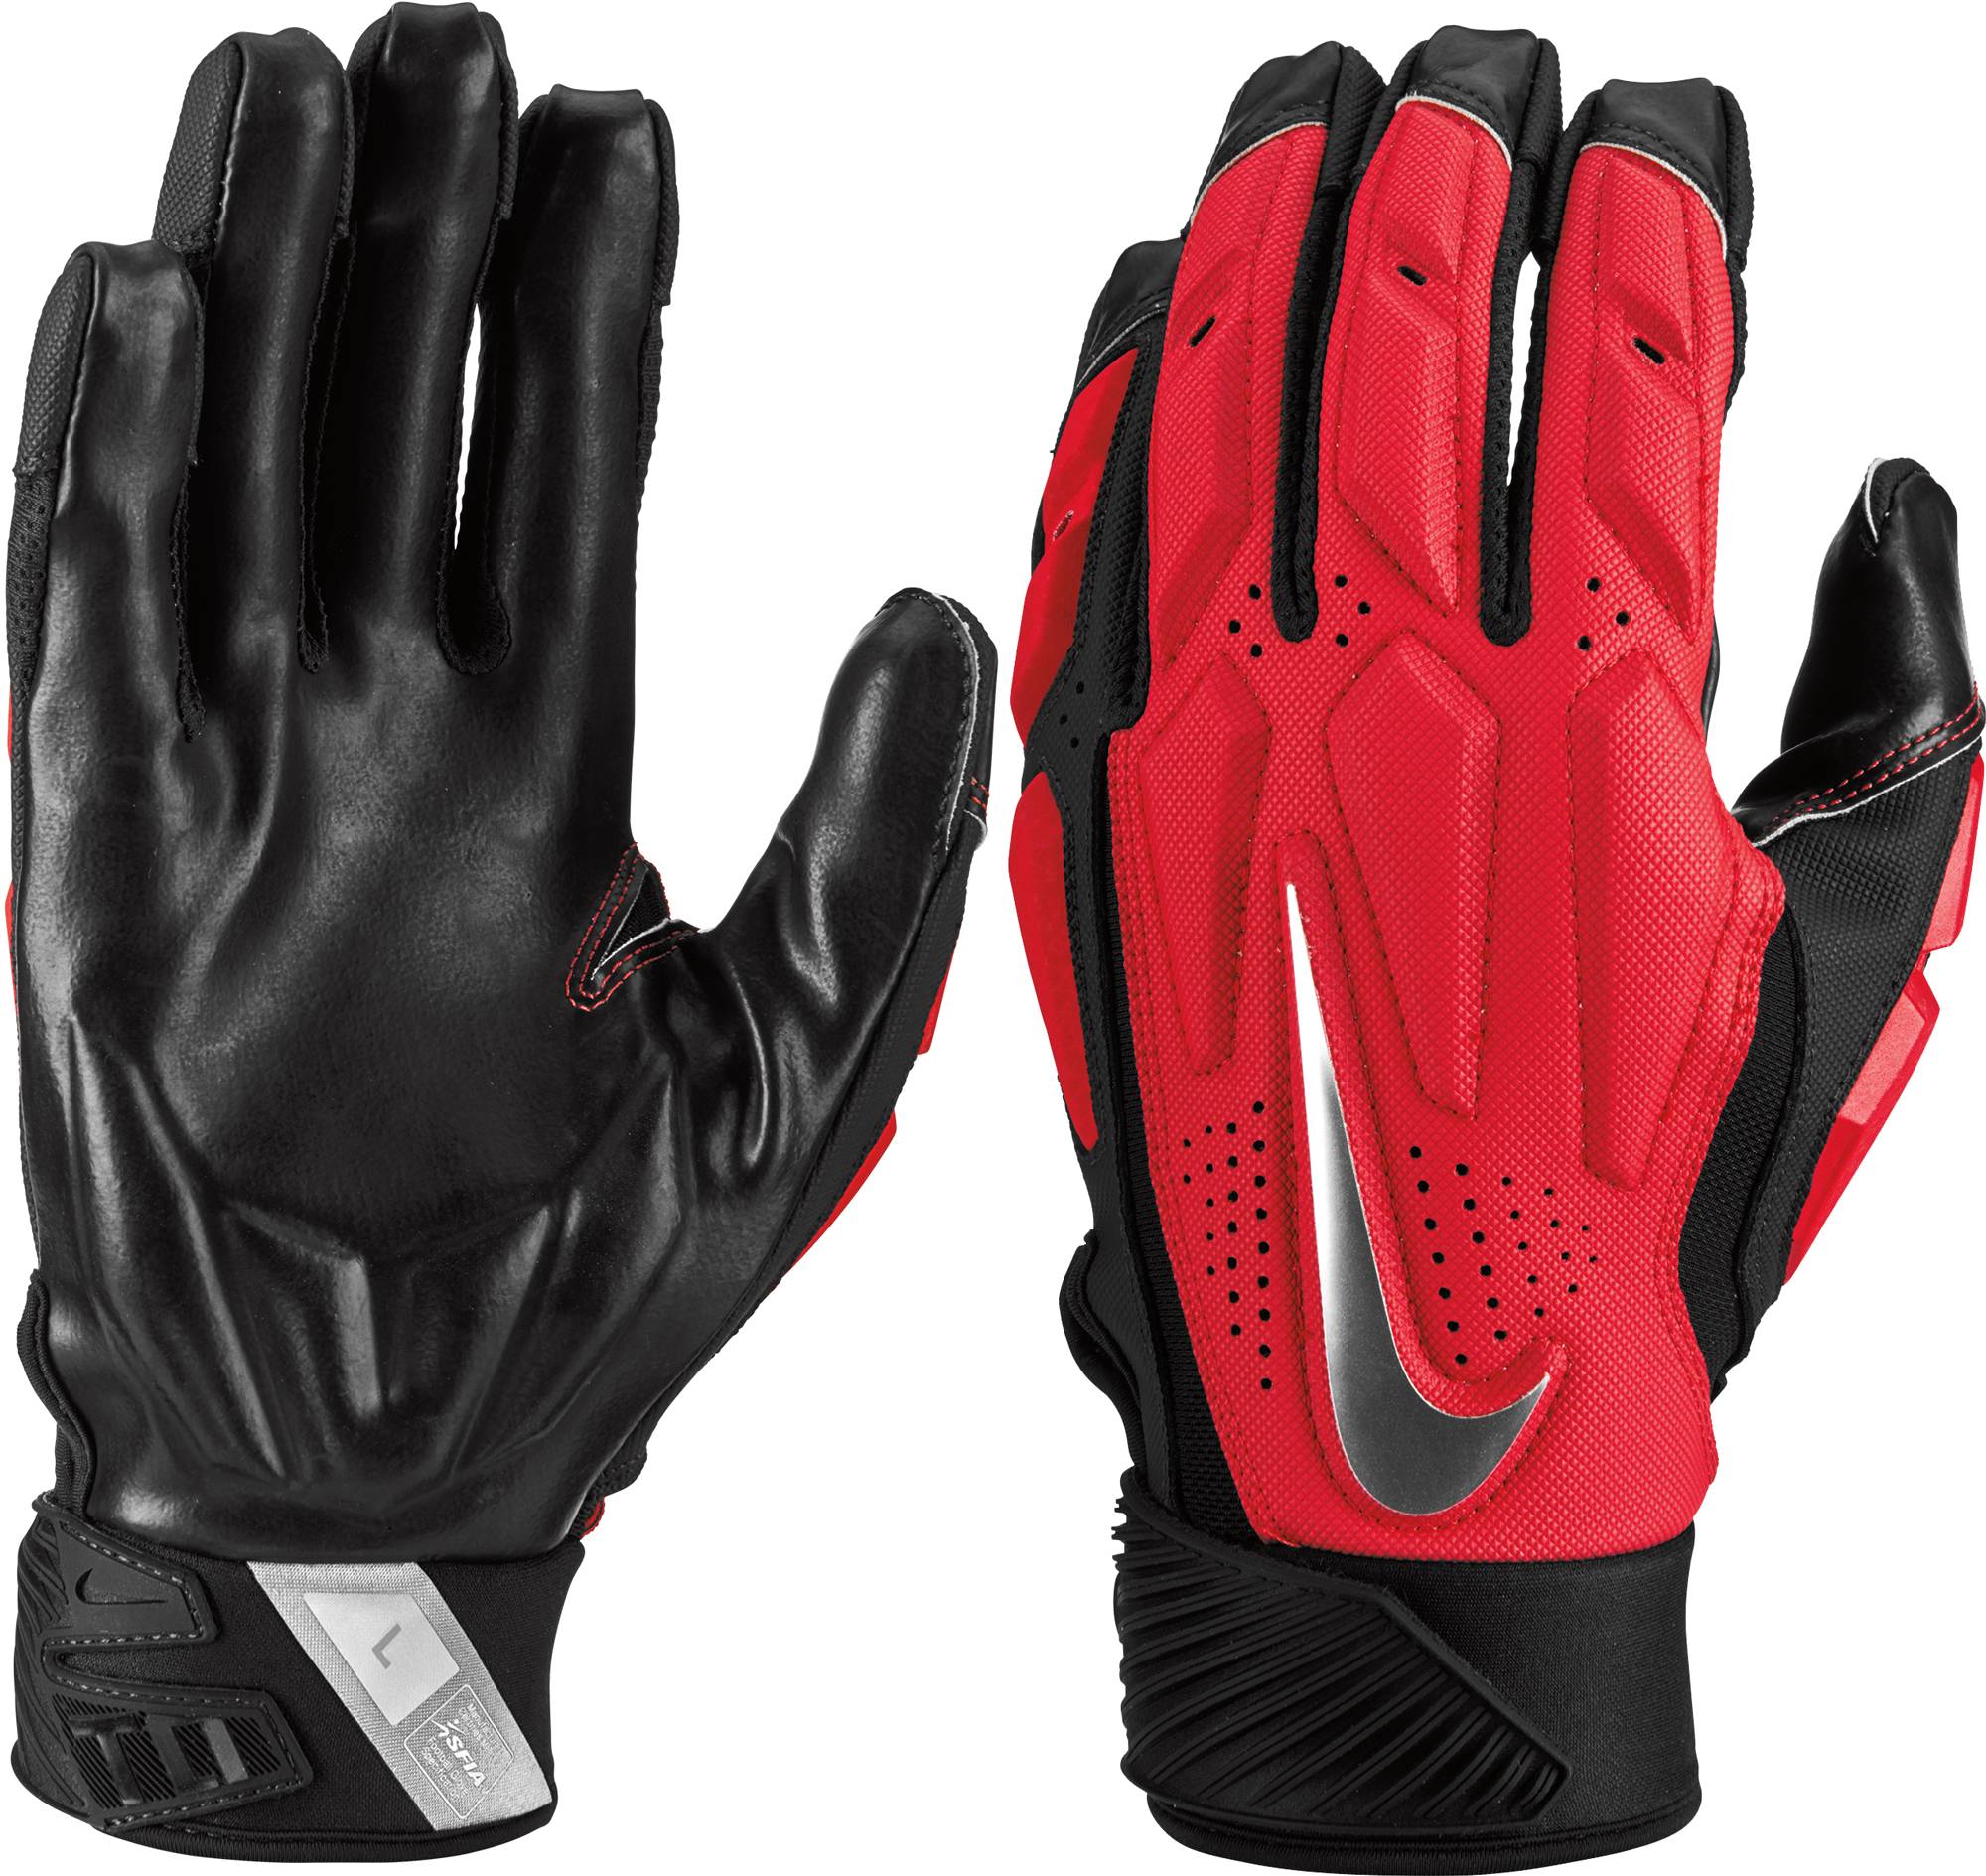 Nike D-Tack 6.0 Adult Football Lineman Gloves